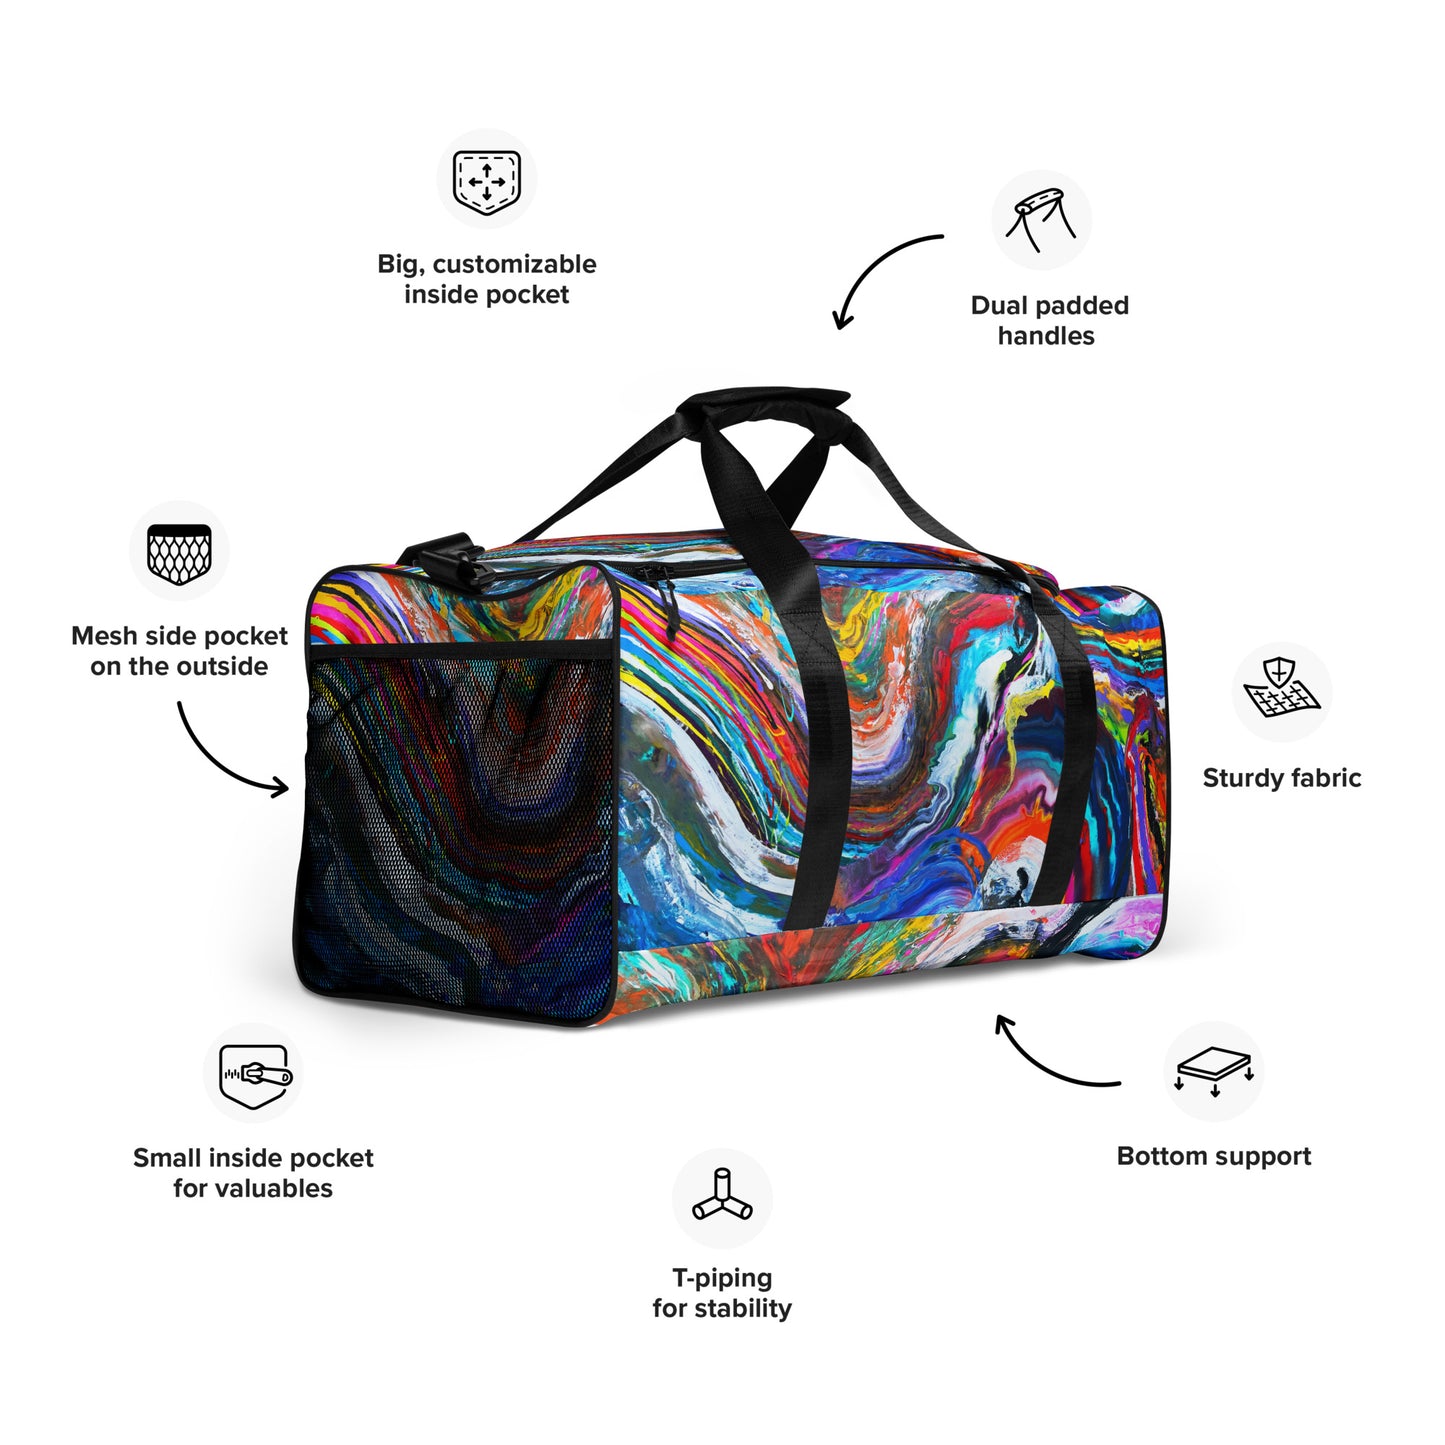 Duffle bag - Rainbow Wave design